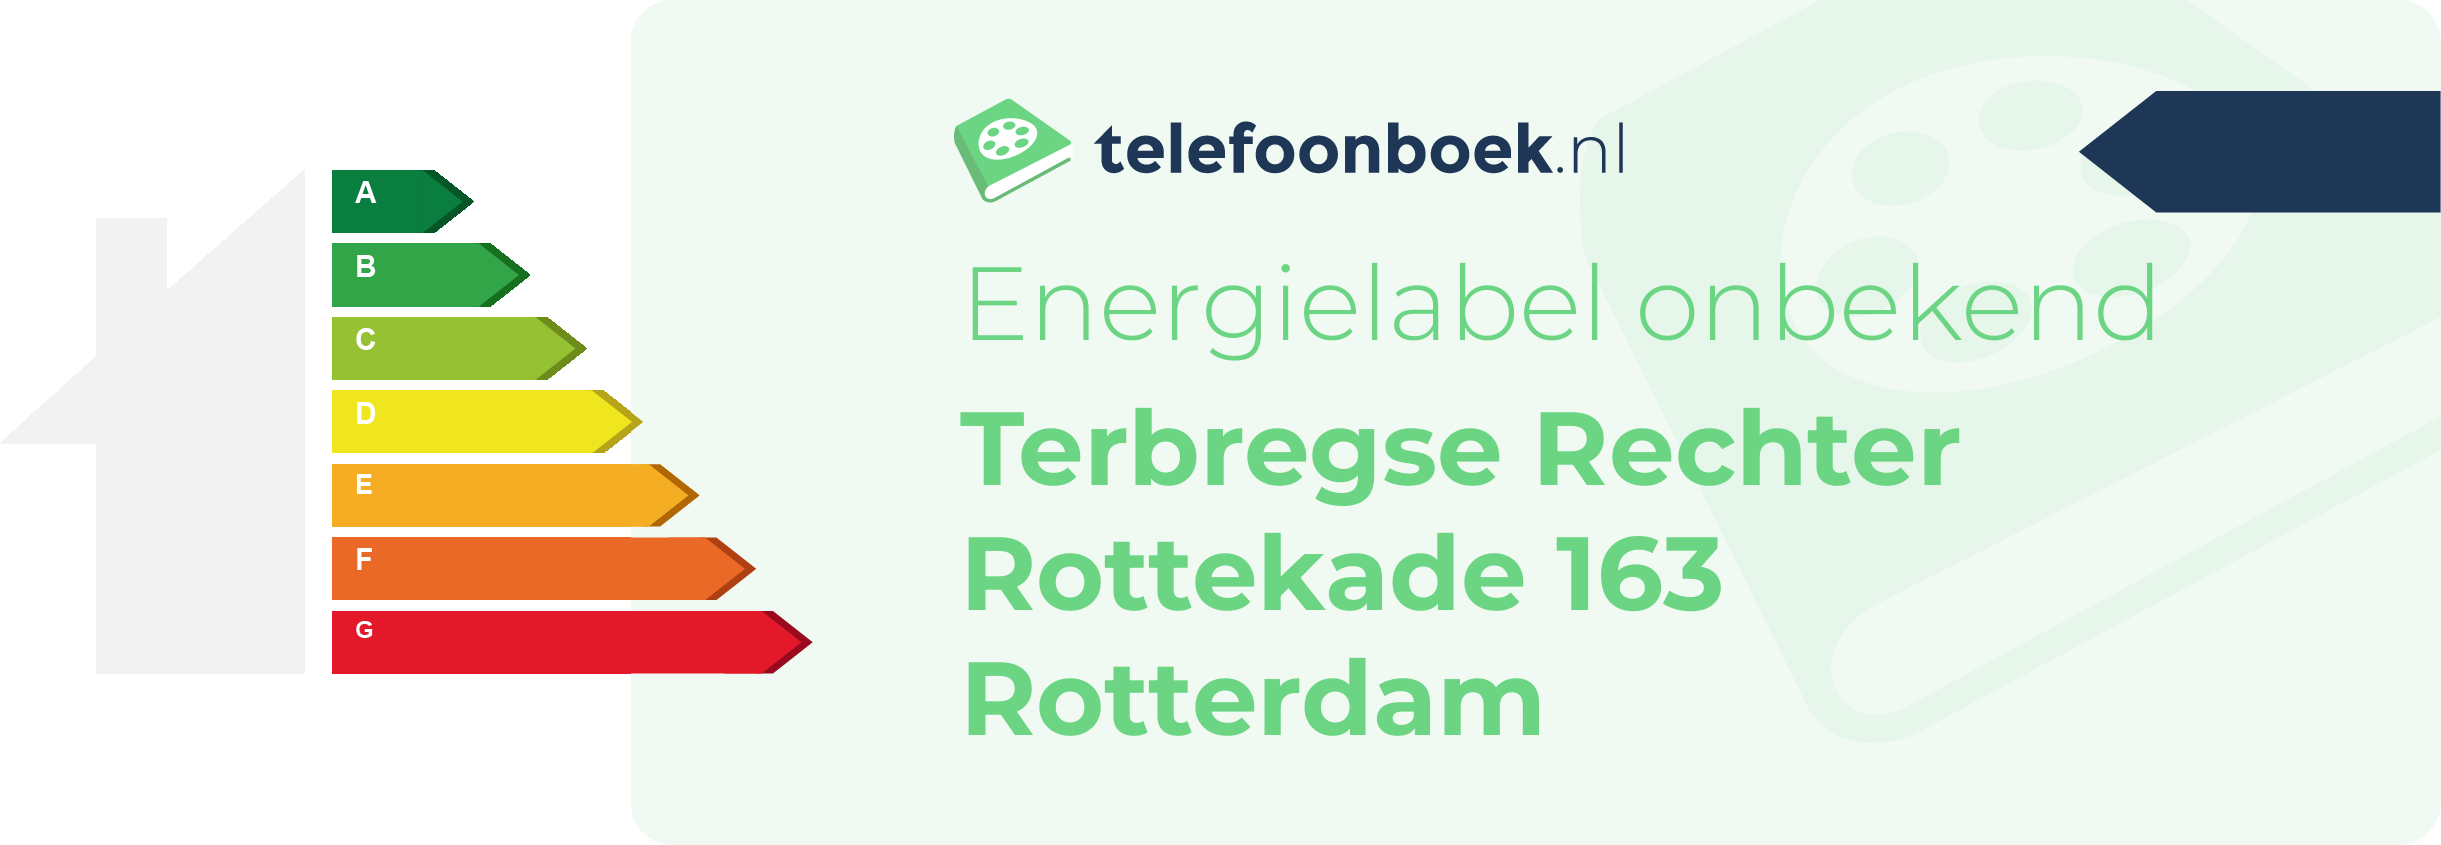 Energielabel Terbregse Rechter Rottekade 163 Rotterdam